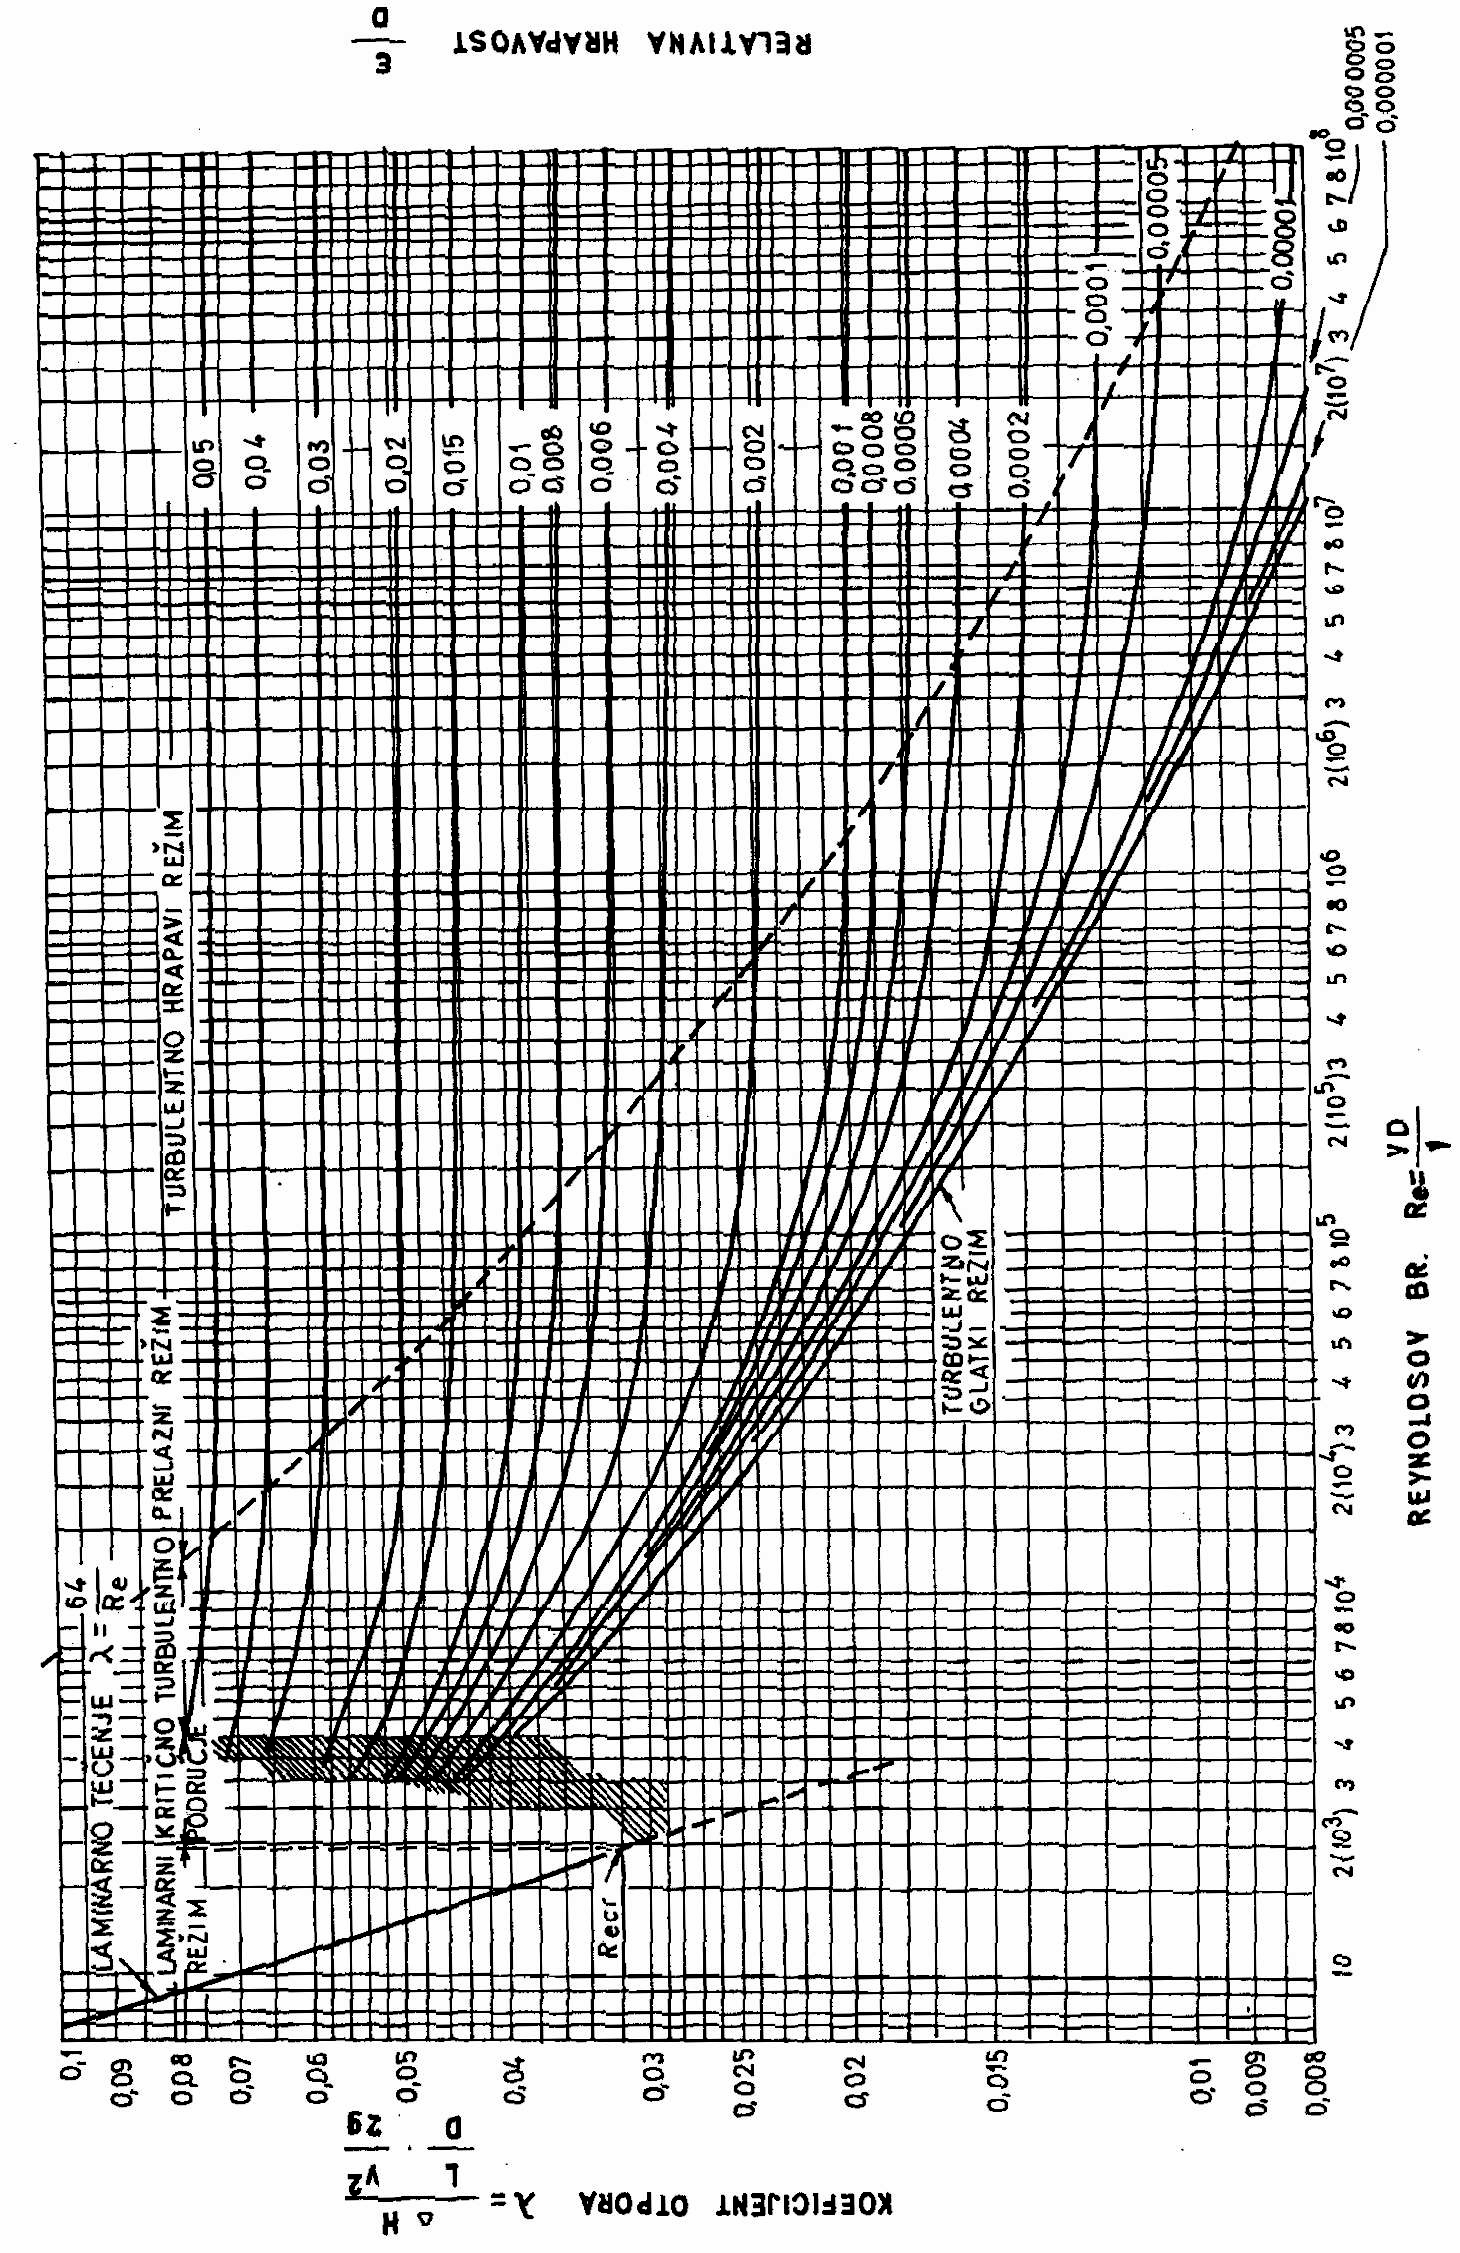 104 GLAVA 9: TEC ENJE KROZ CIJEVI Slika 9.21: Moodyev dijagram (preuzeto od R. Z ugaj, Hidrologija).